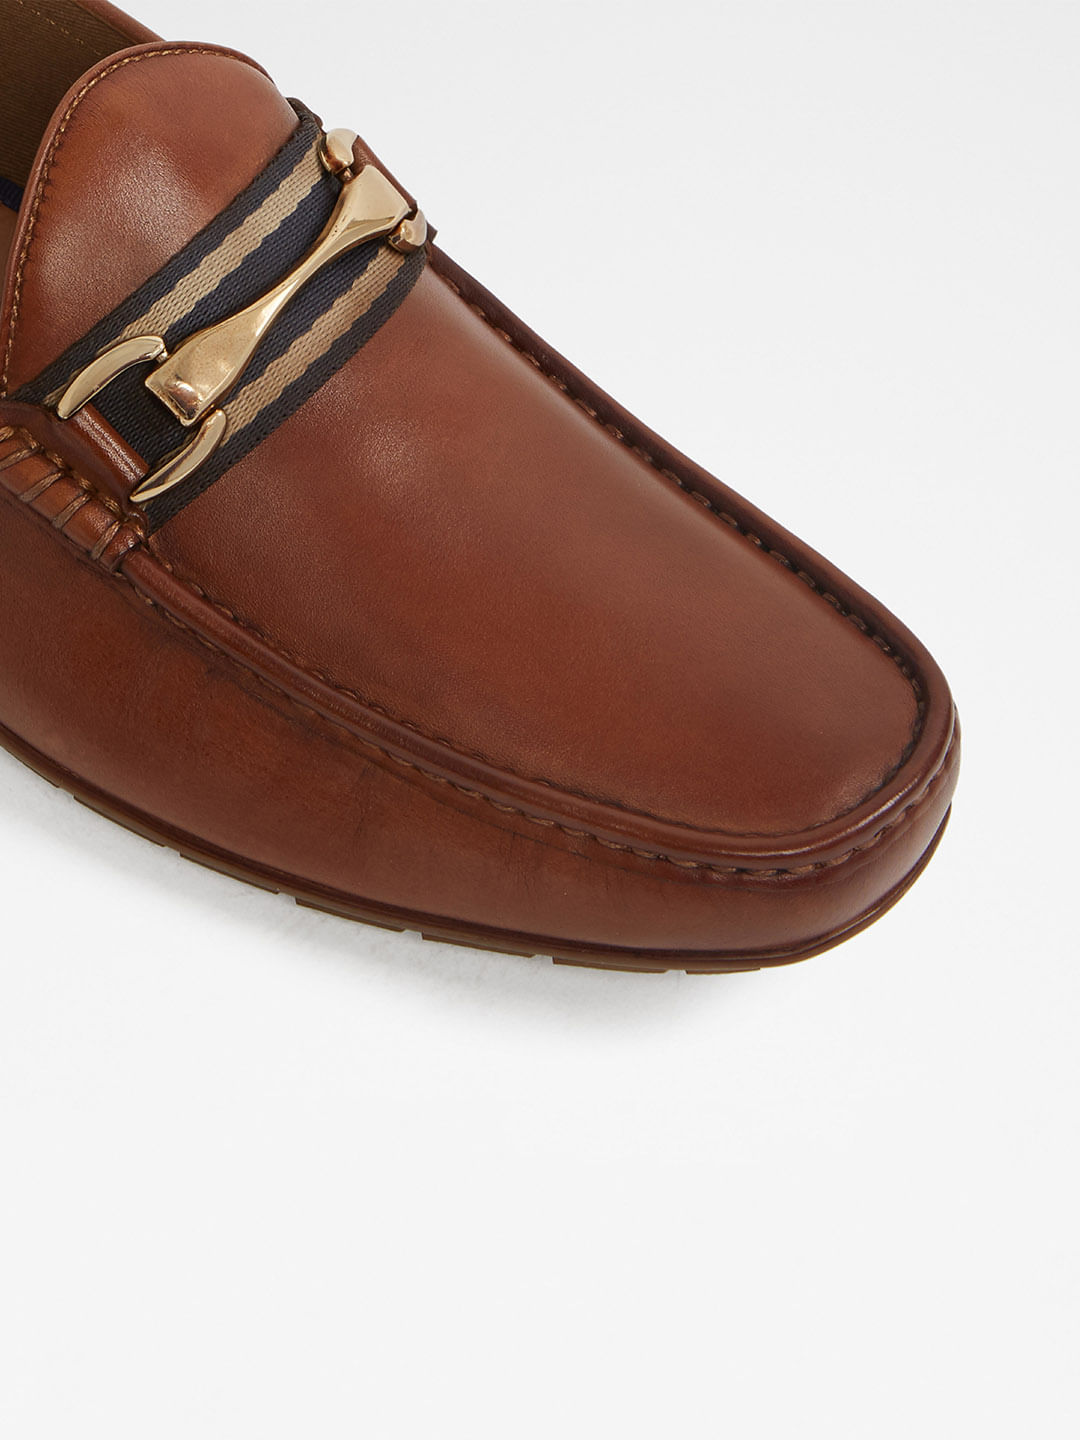 Buy Casual Online | Aldo shoes